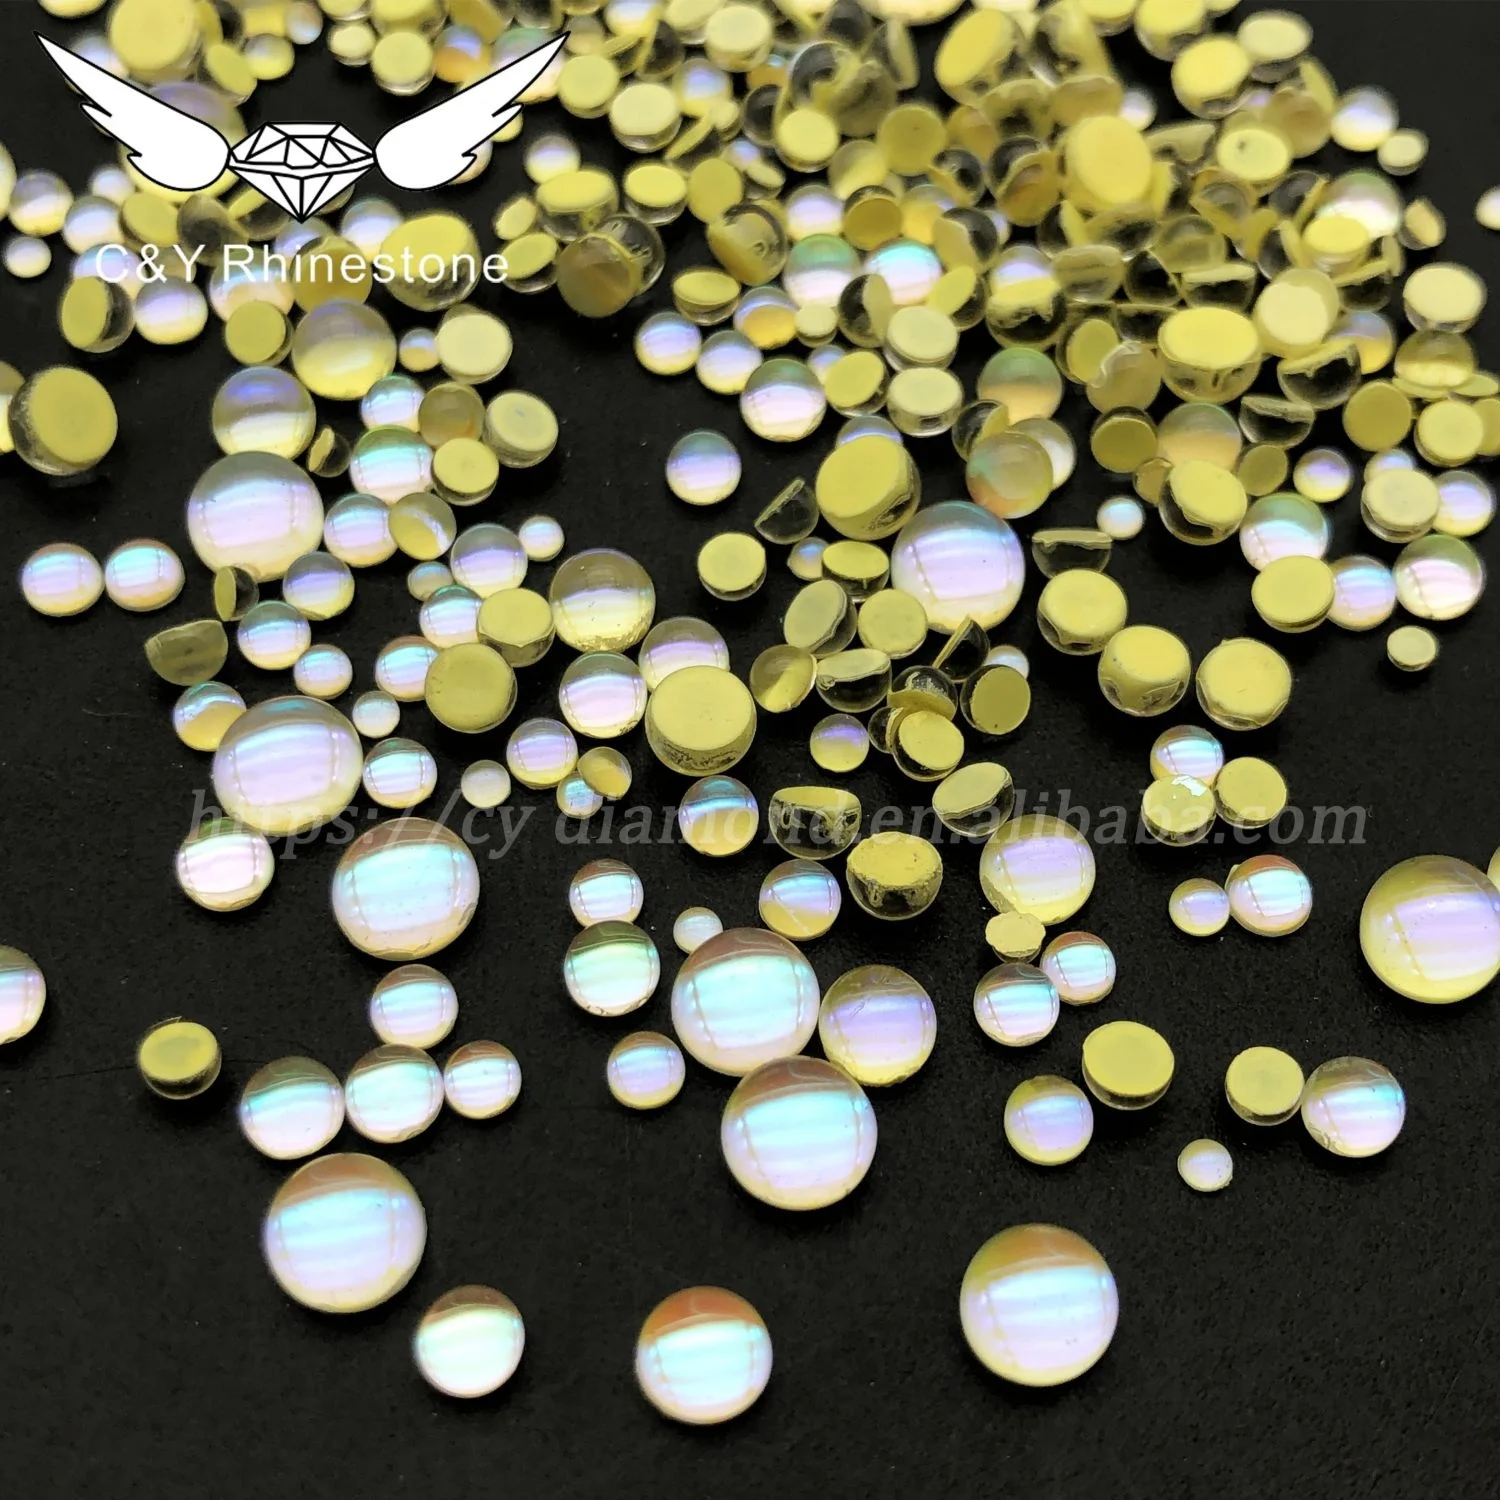 

CY Mermaid Tears Clear Glass Rhinestones Nail Art Crystal Size Half Pearls Beads Flatback Beads